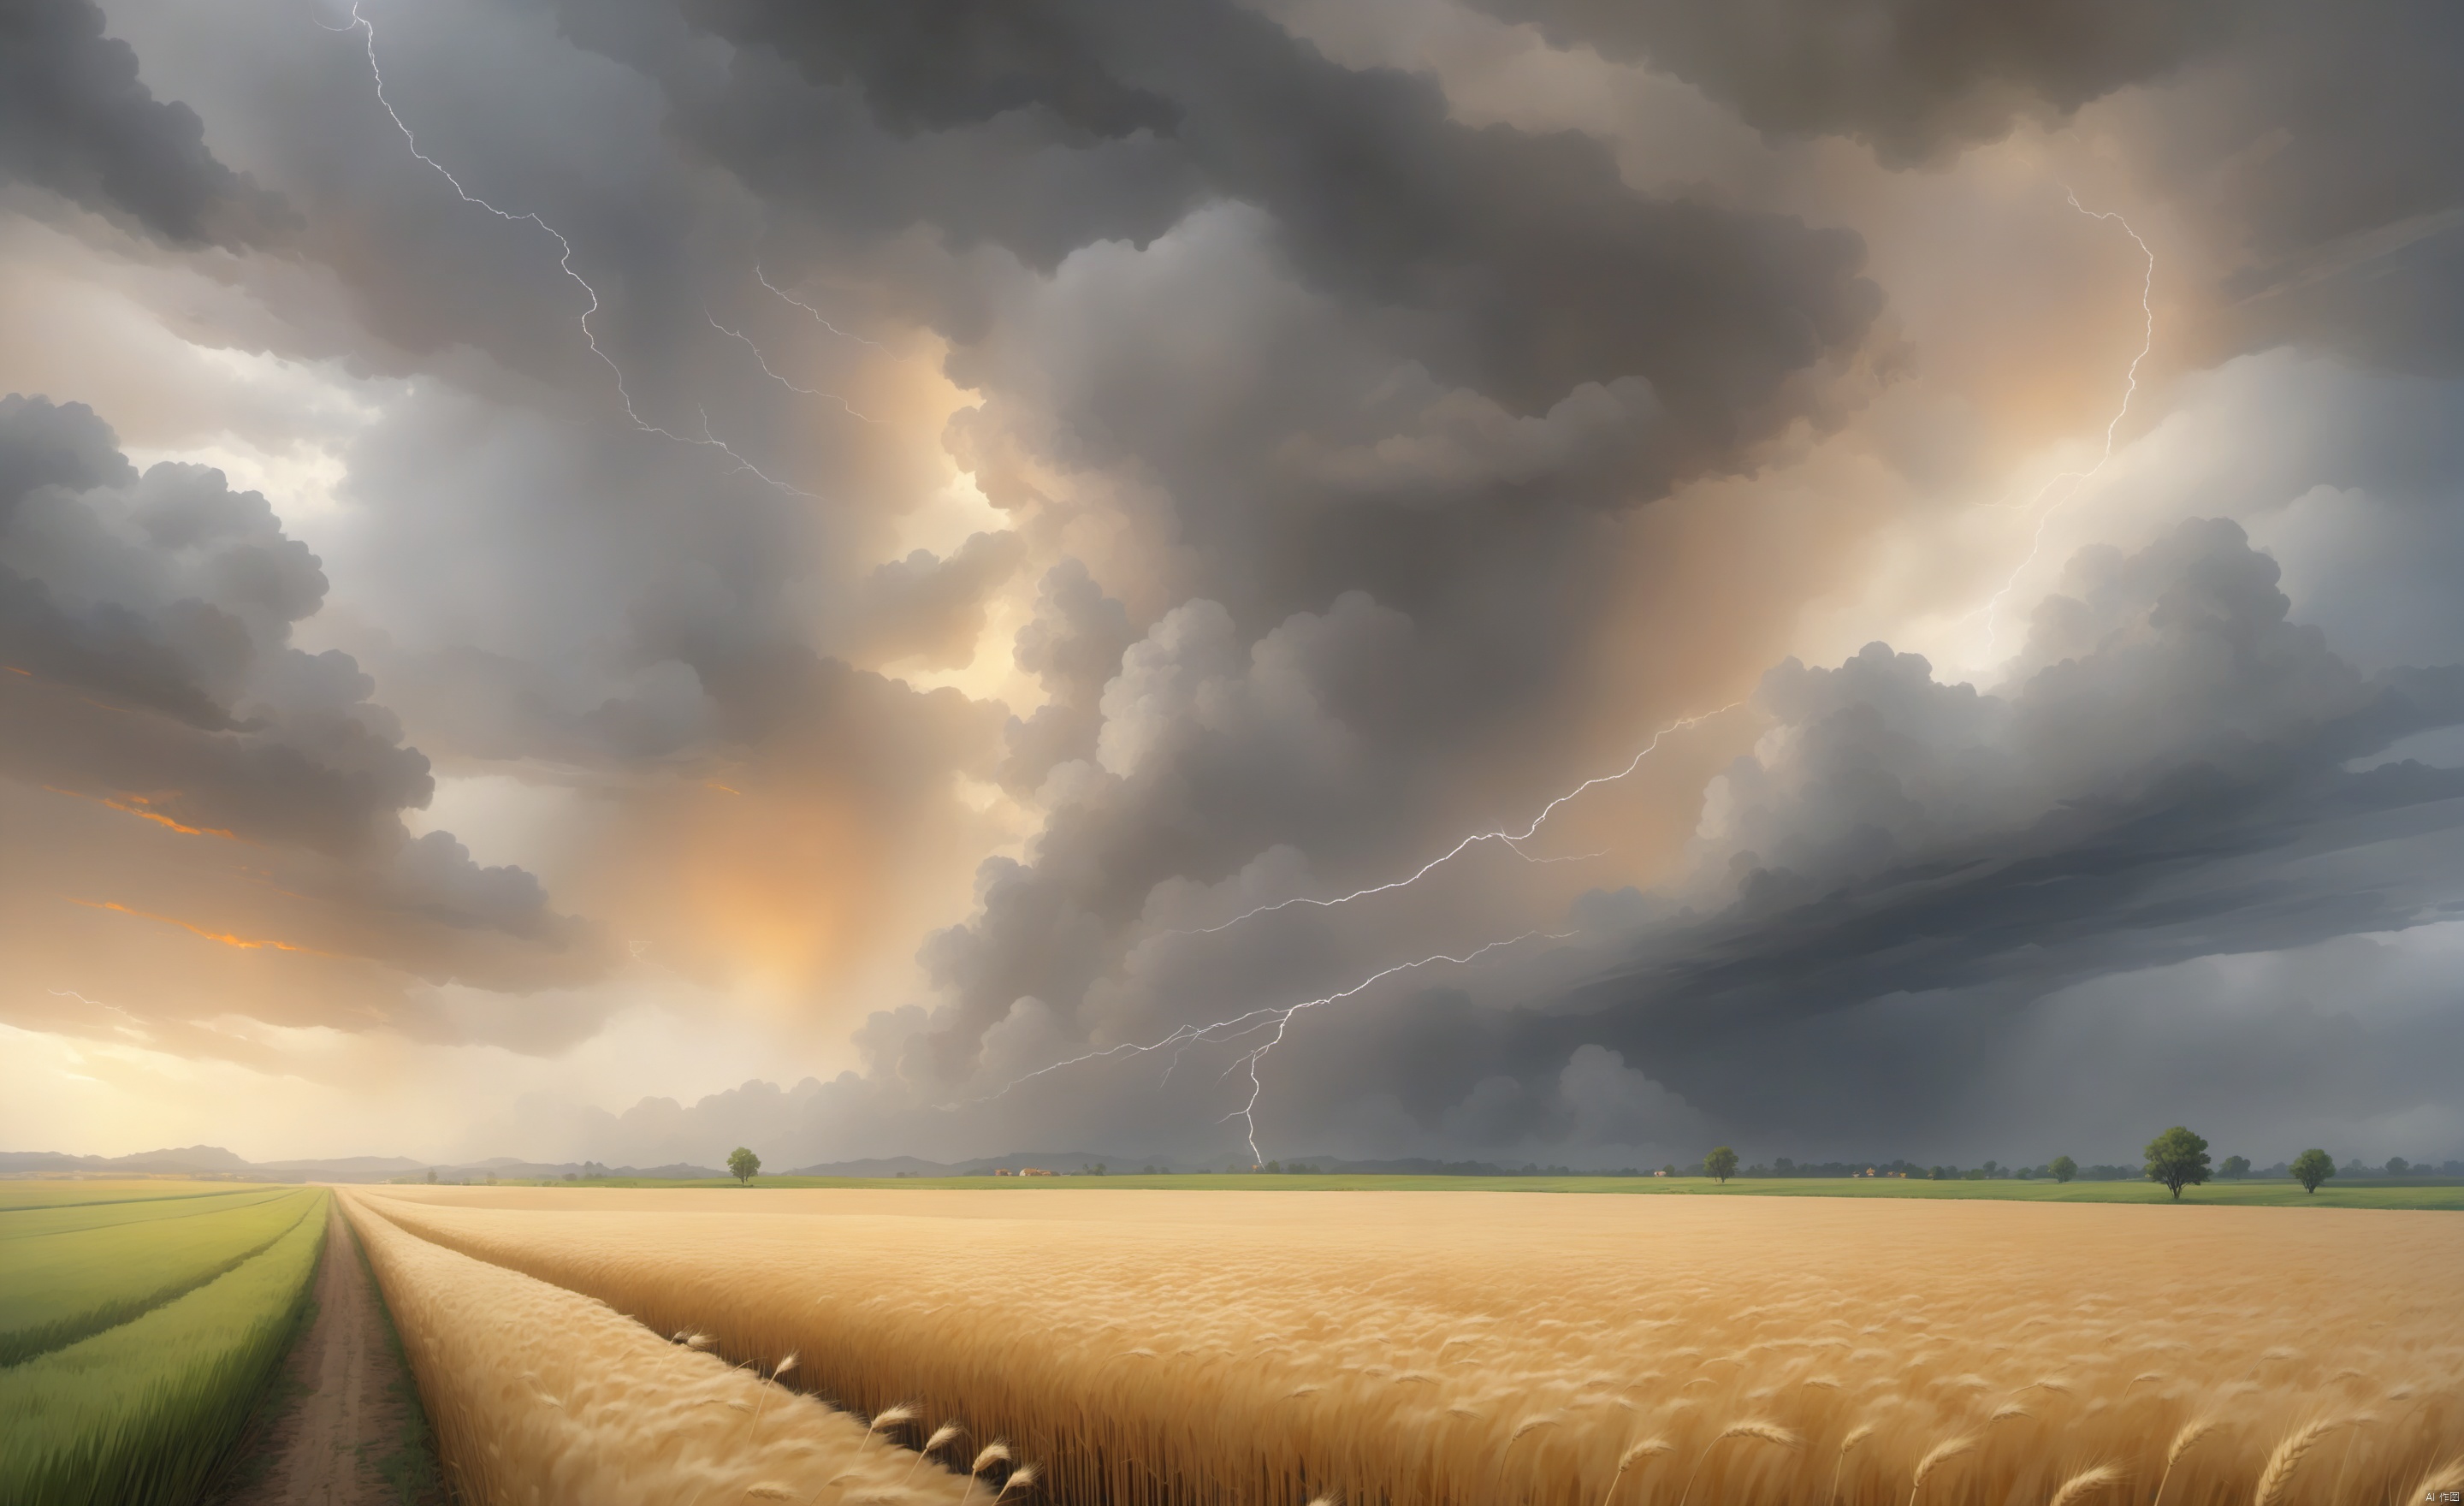 downburst cloud Asperitas clouds_1.3, Background gold Wheat Field, Accompanied by orange lightning and heavy rain, Cloudy day, landscape,乡村